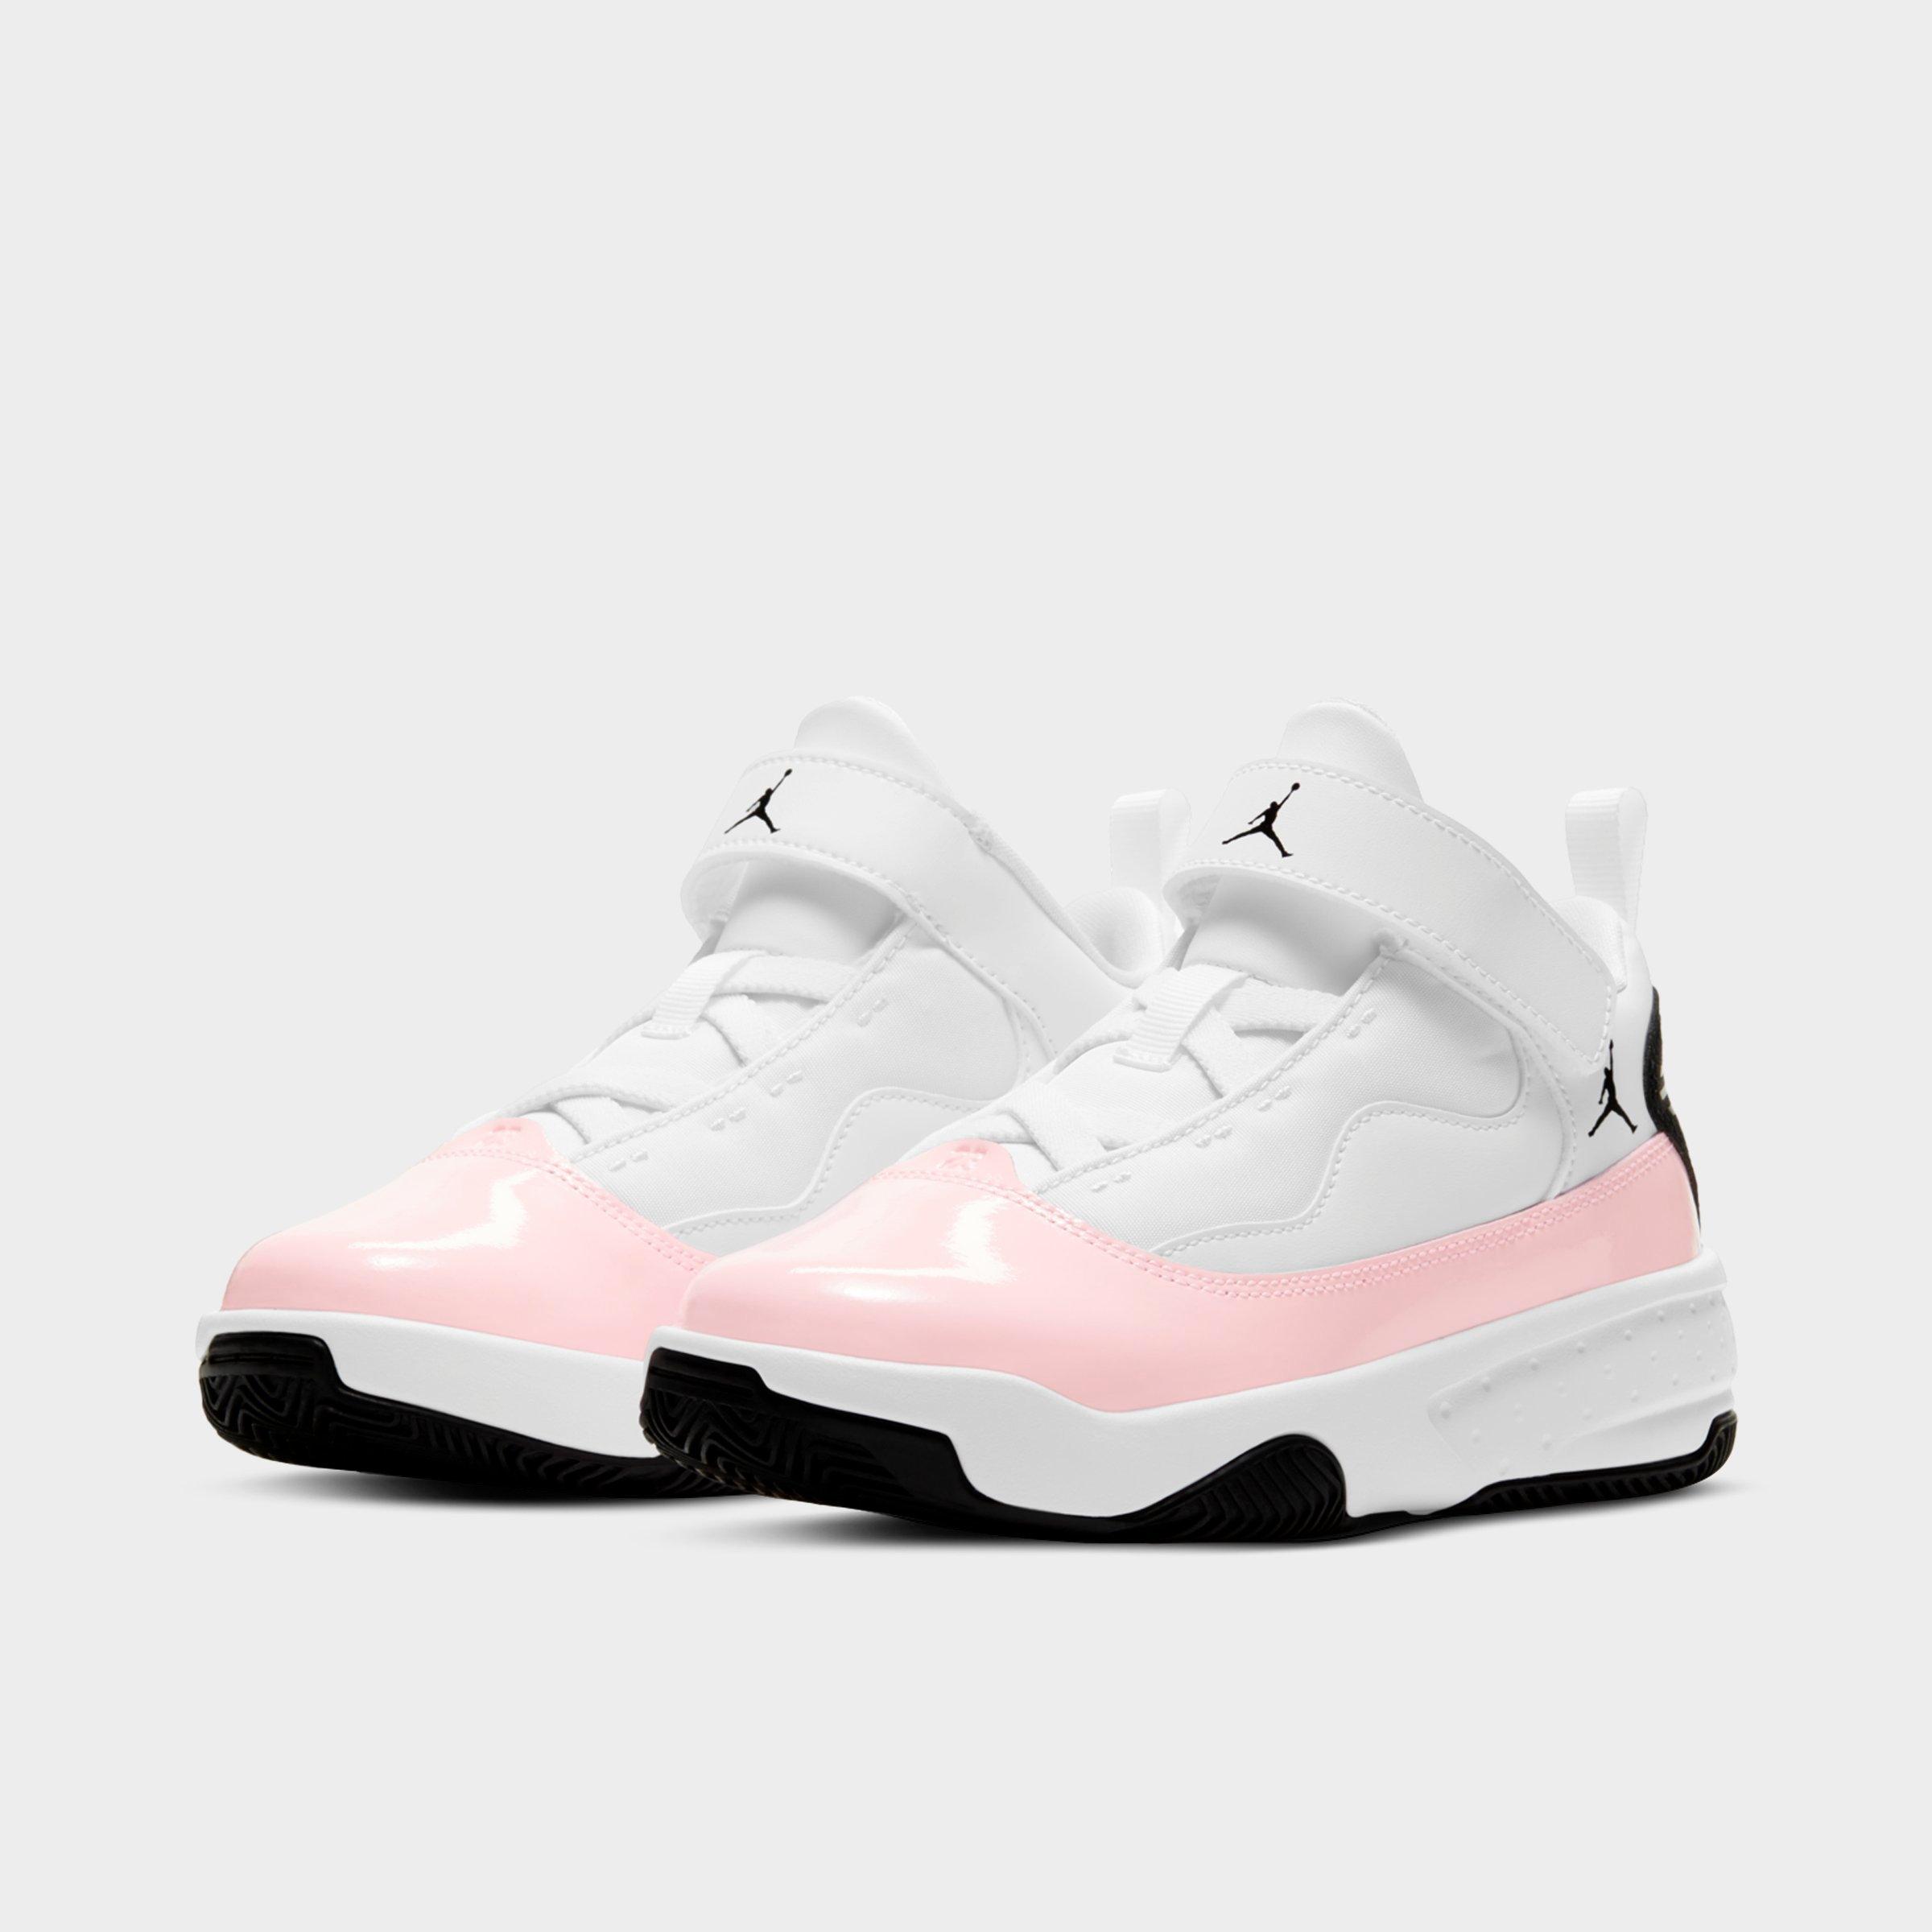 jordan max aura pink and white